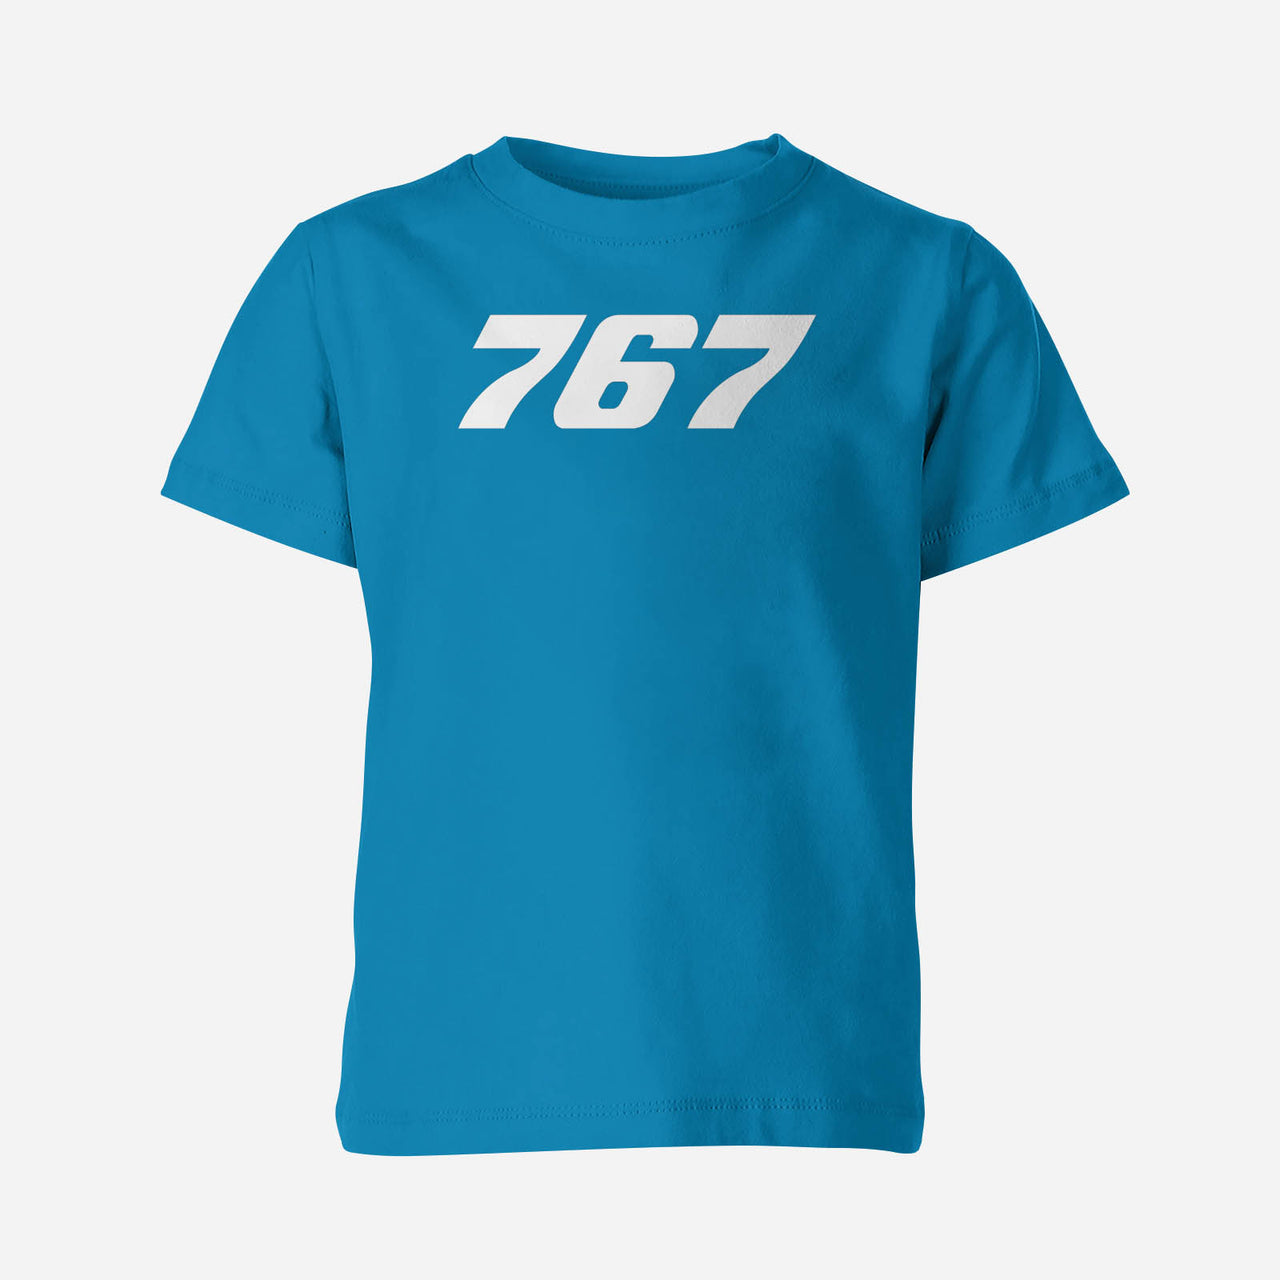 767 Flat Text Designed Children T-Shirts